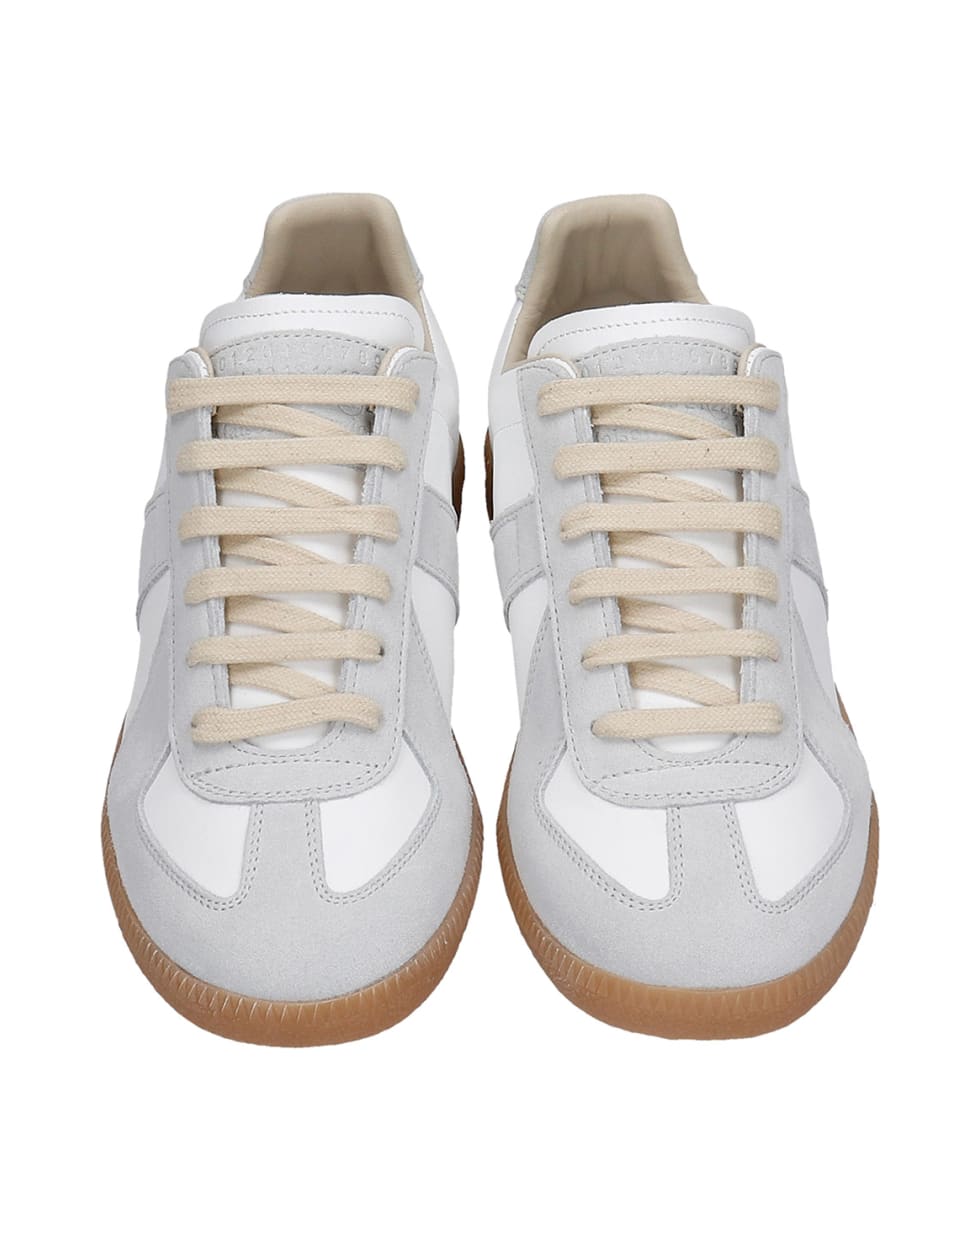 Maison Margiela Replica Sneakers In White Leather - white